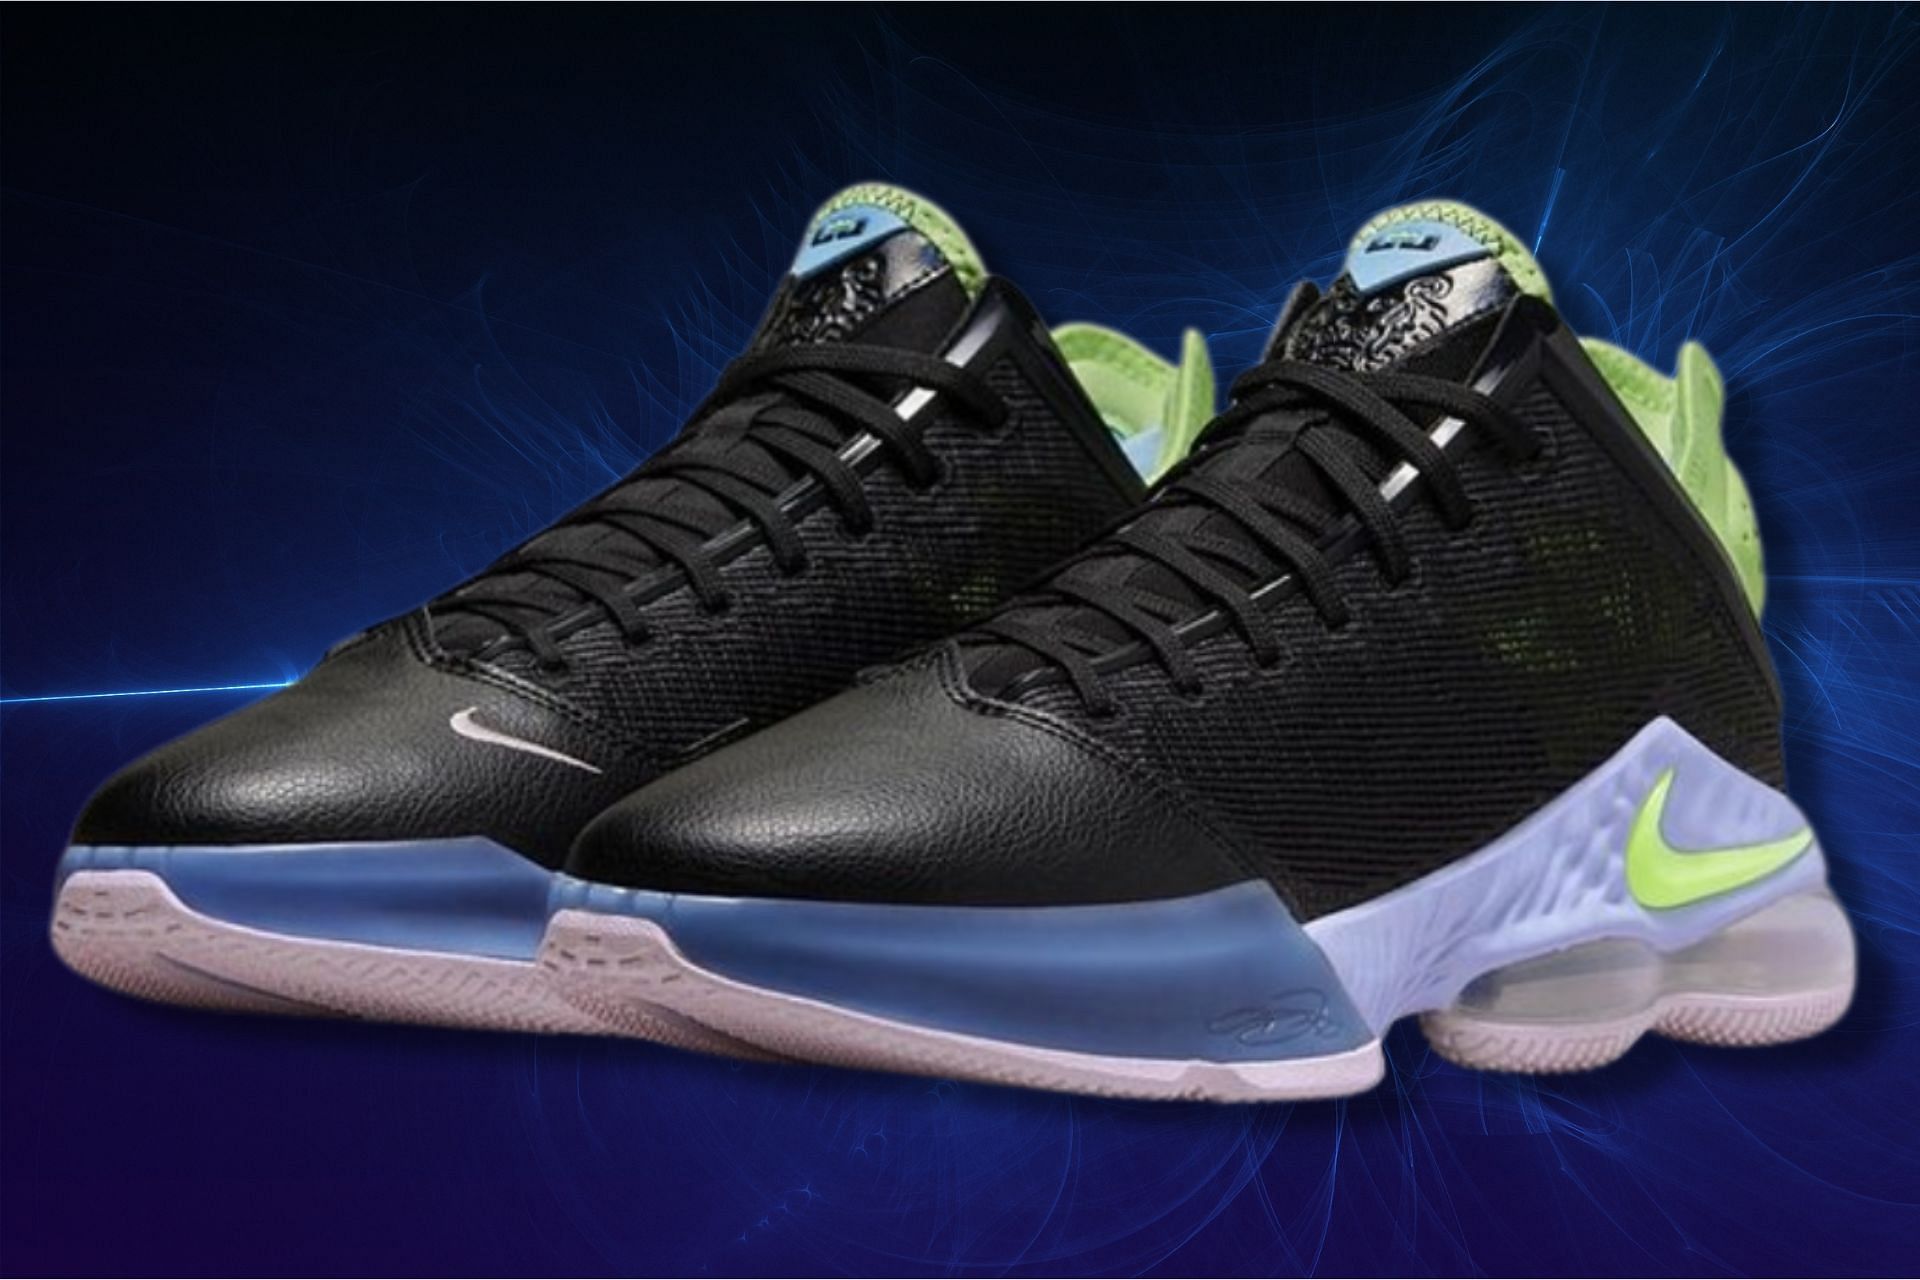 Nike LeBron 19 Low Black Volt colorway (Image via Nike)